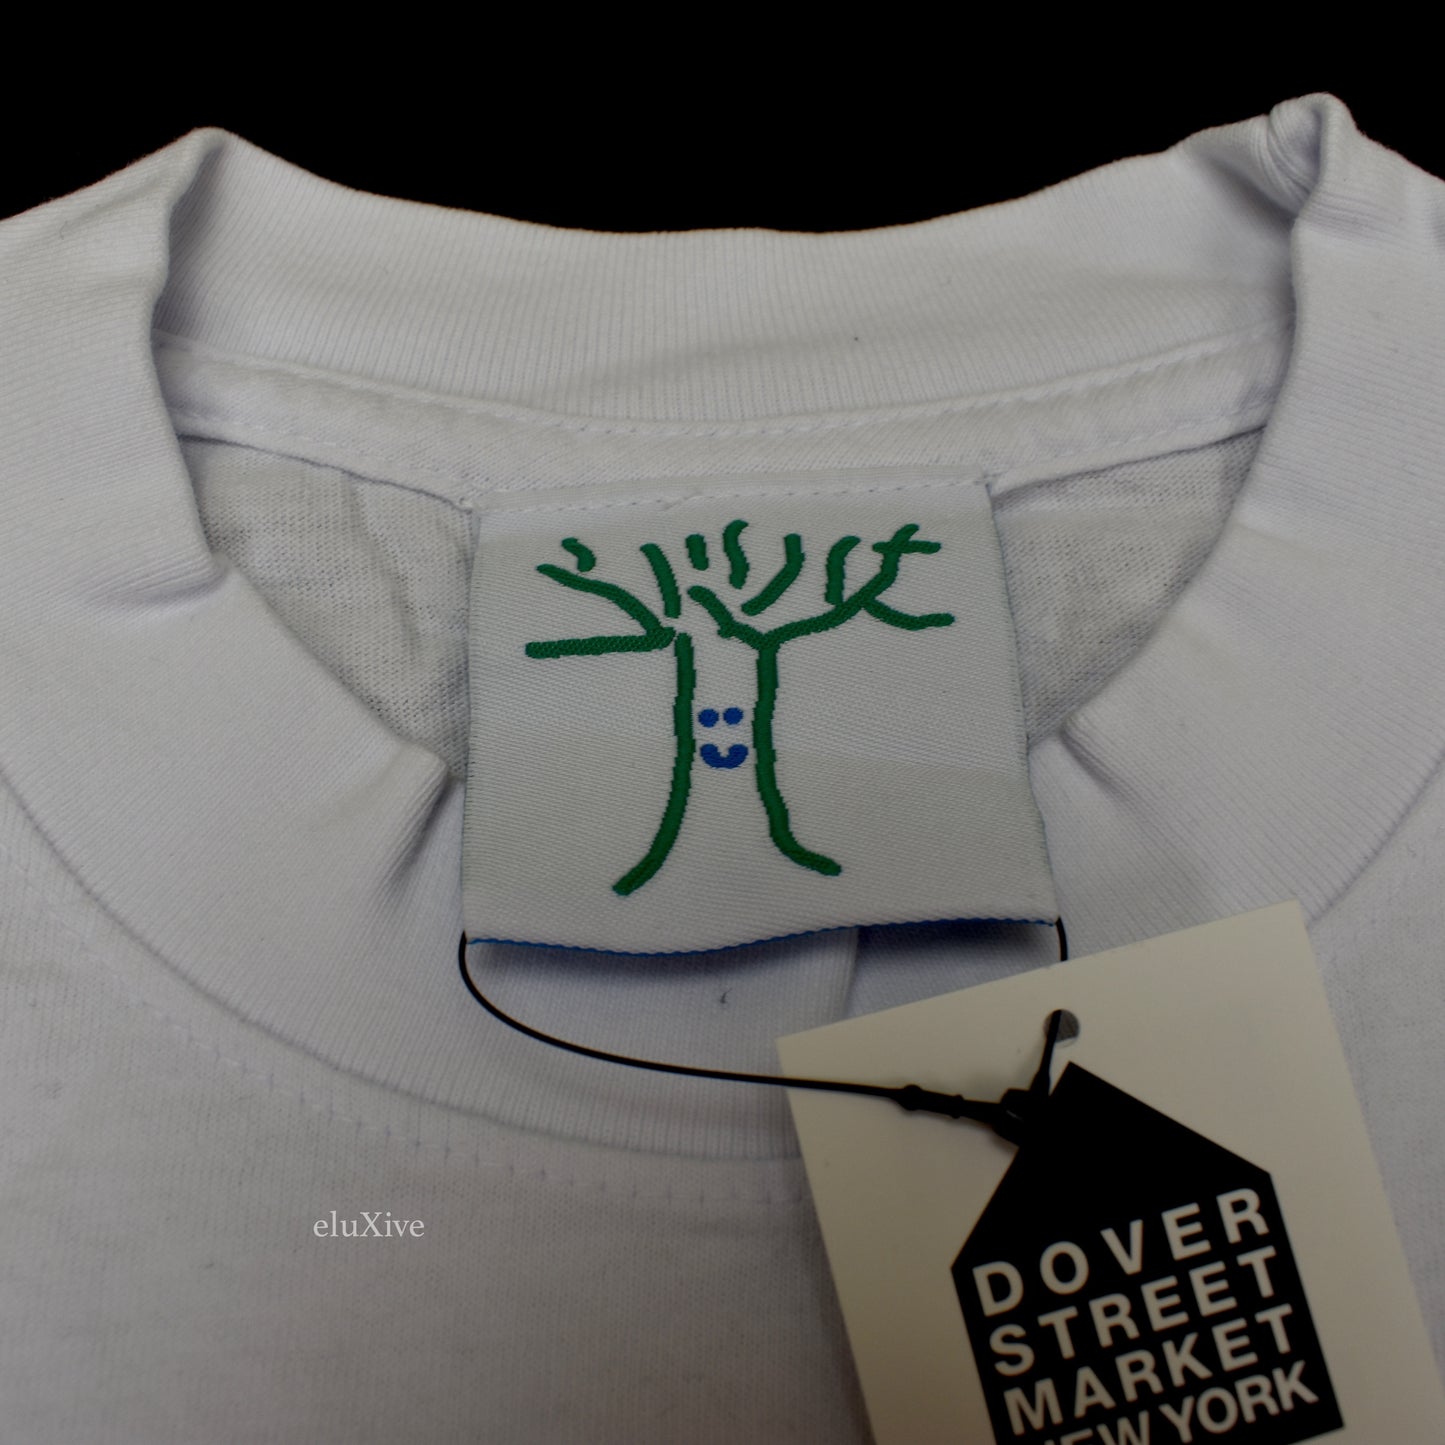 Online Ceramics x DSM - Poppy Logo Print 'Fearless' T-Shirt